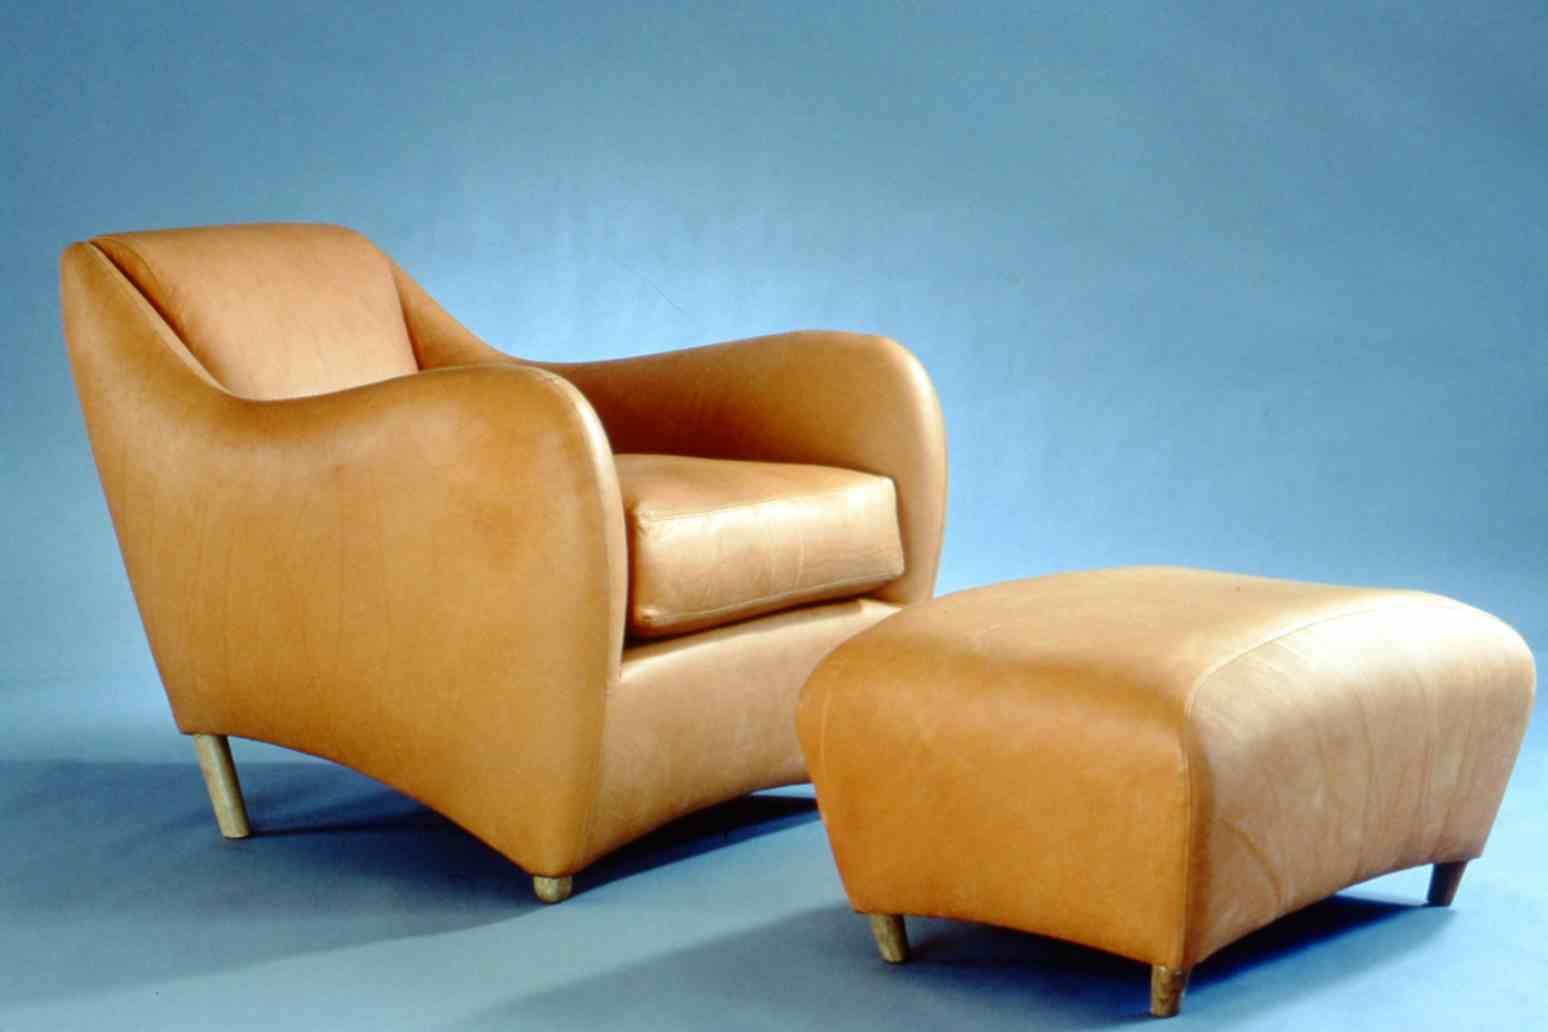 1990's early studio shoot of the Balzac armchair and ottoman.